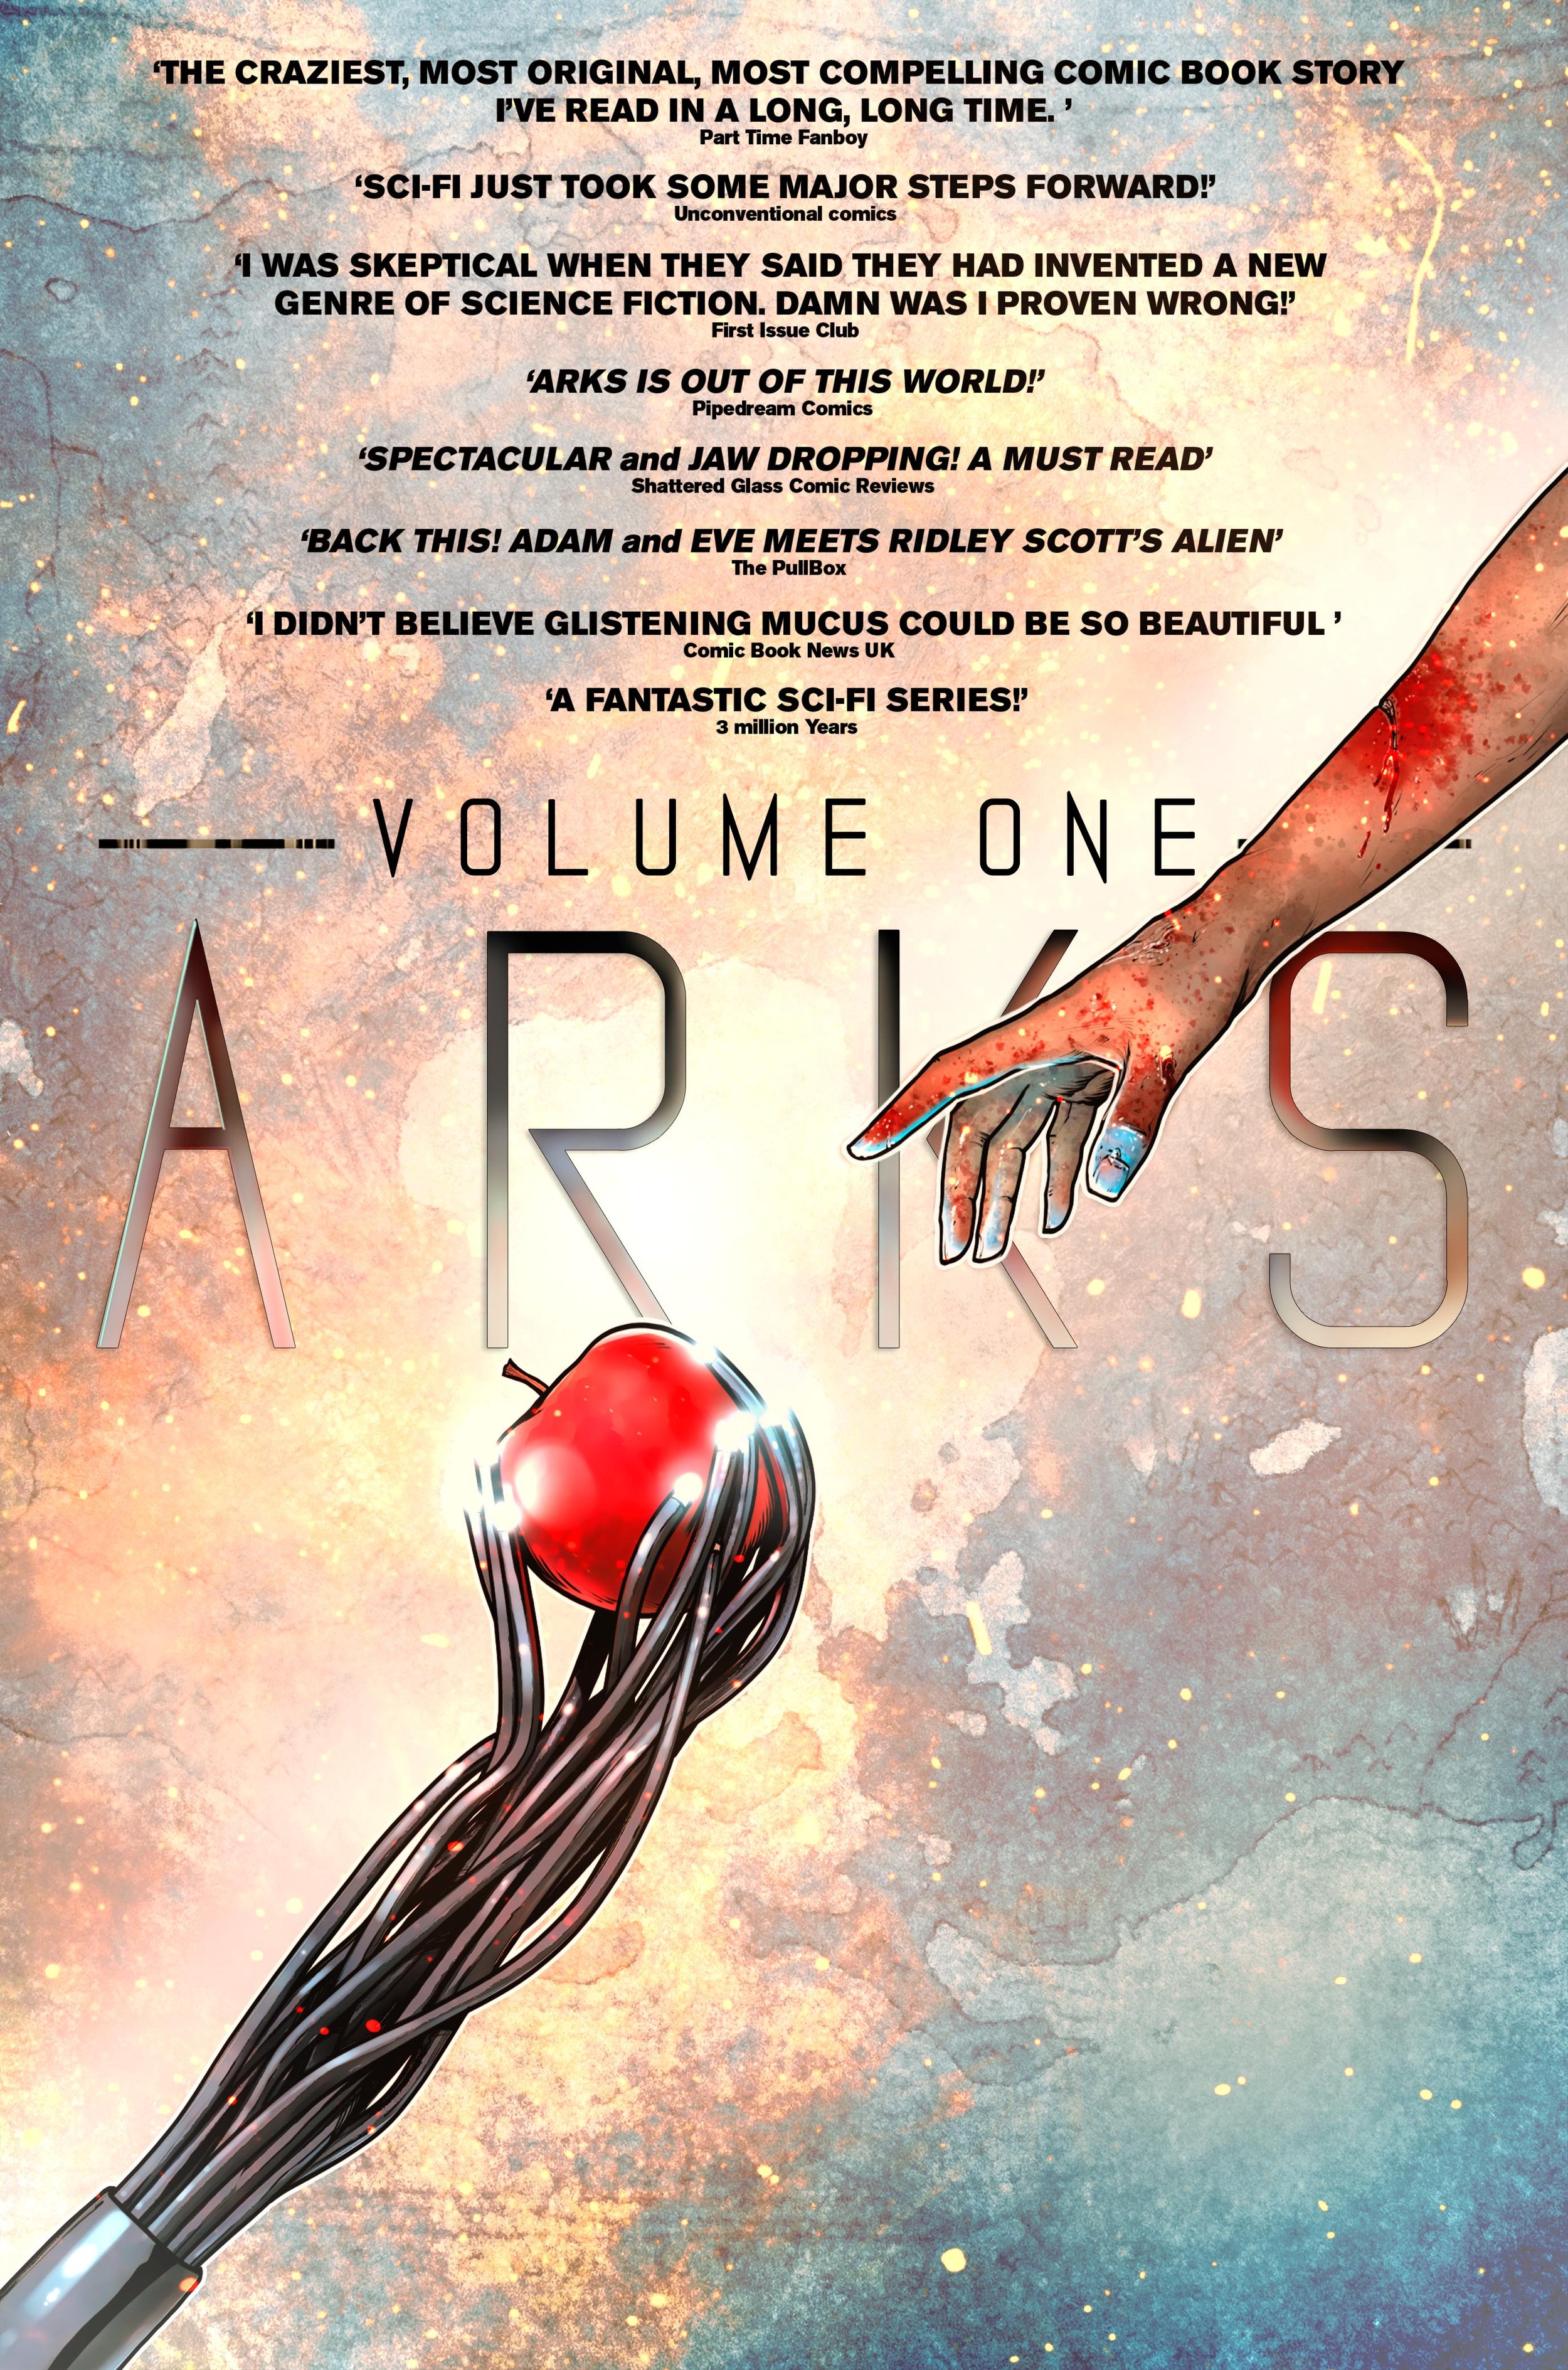 Arks_VolumeOne_Frontcover_Descent_Vs6_Poster.jpg